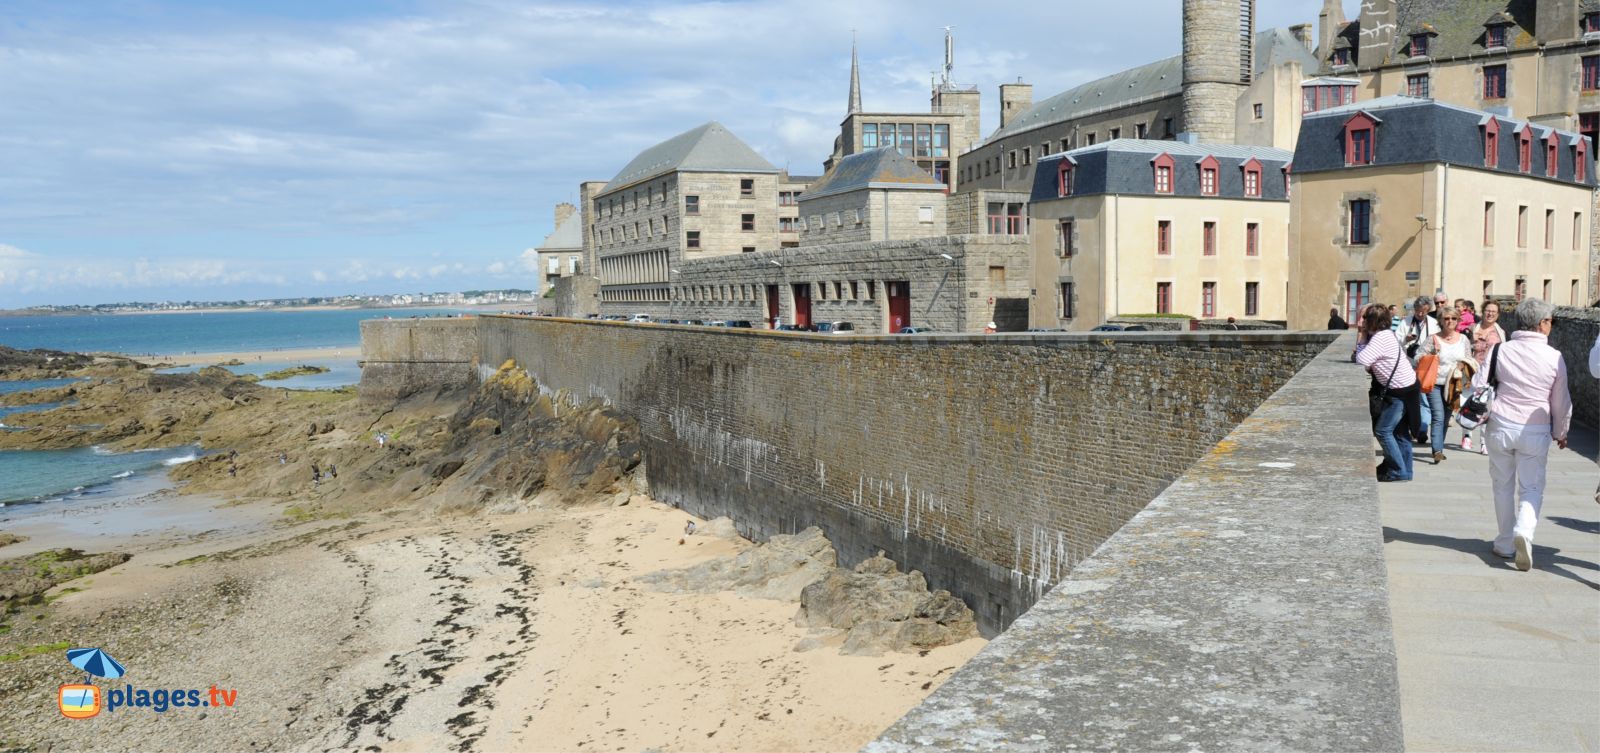 One beach in Saint Malo